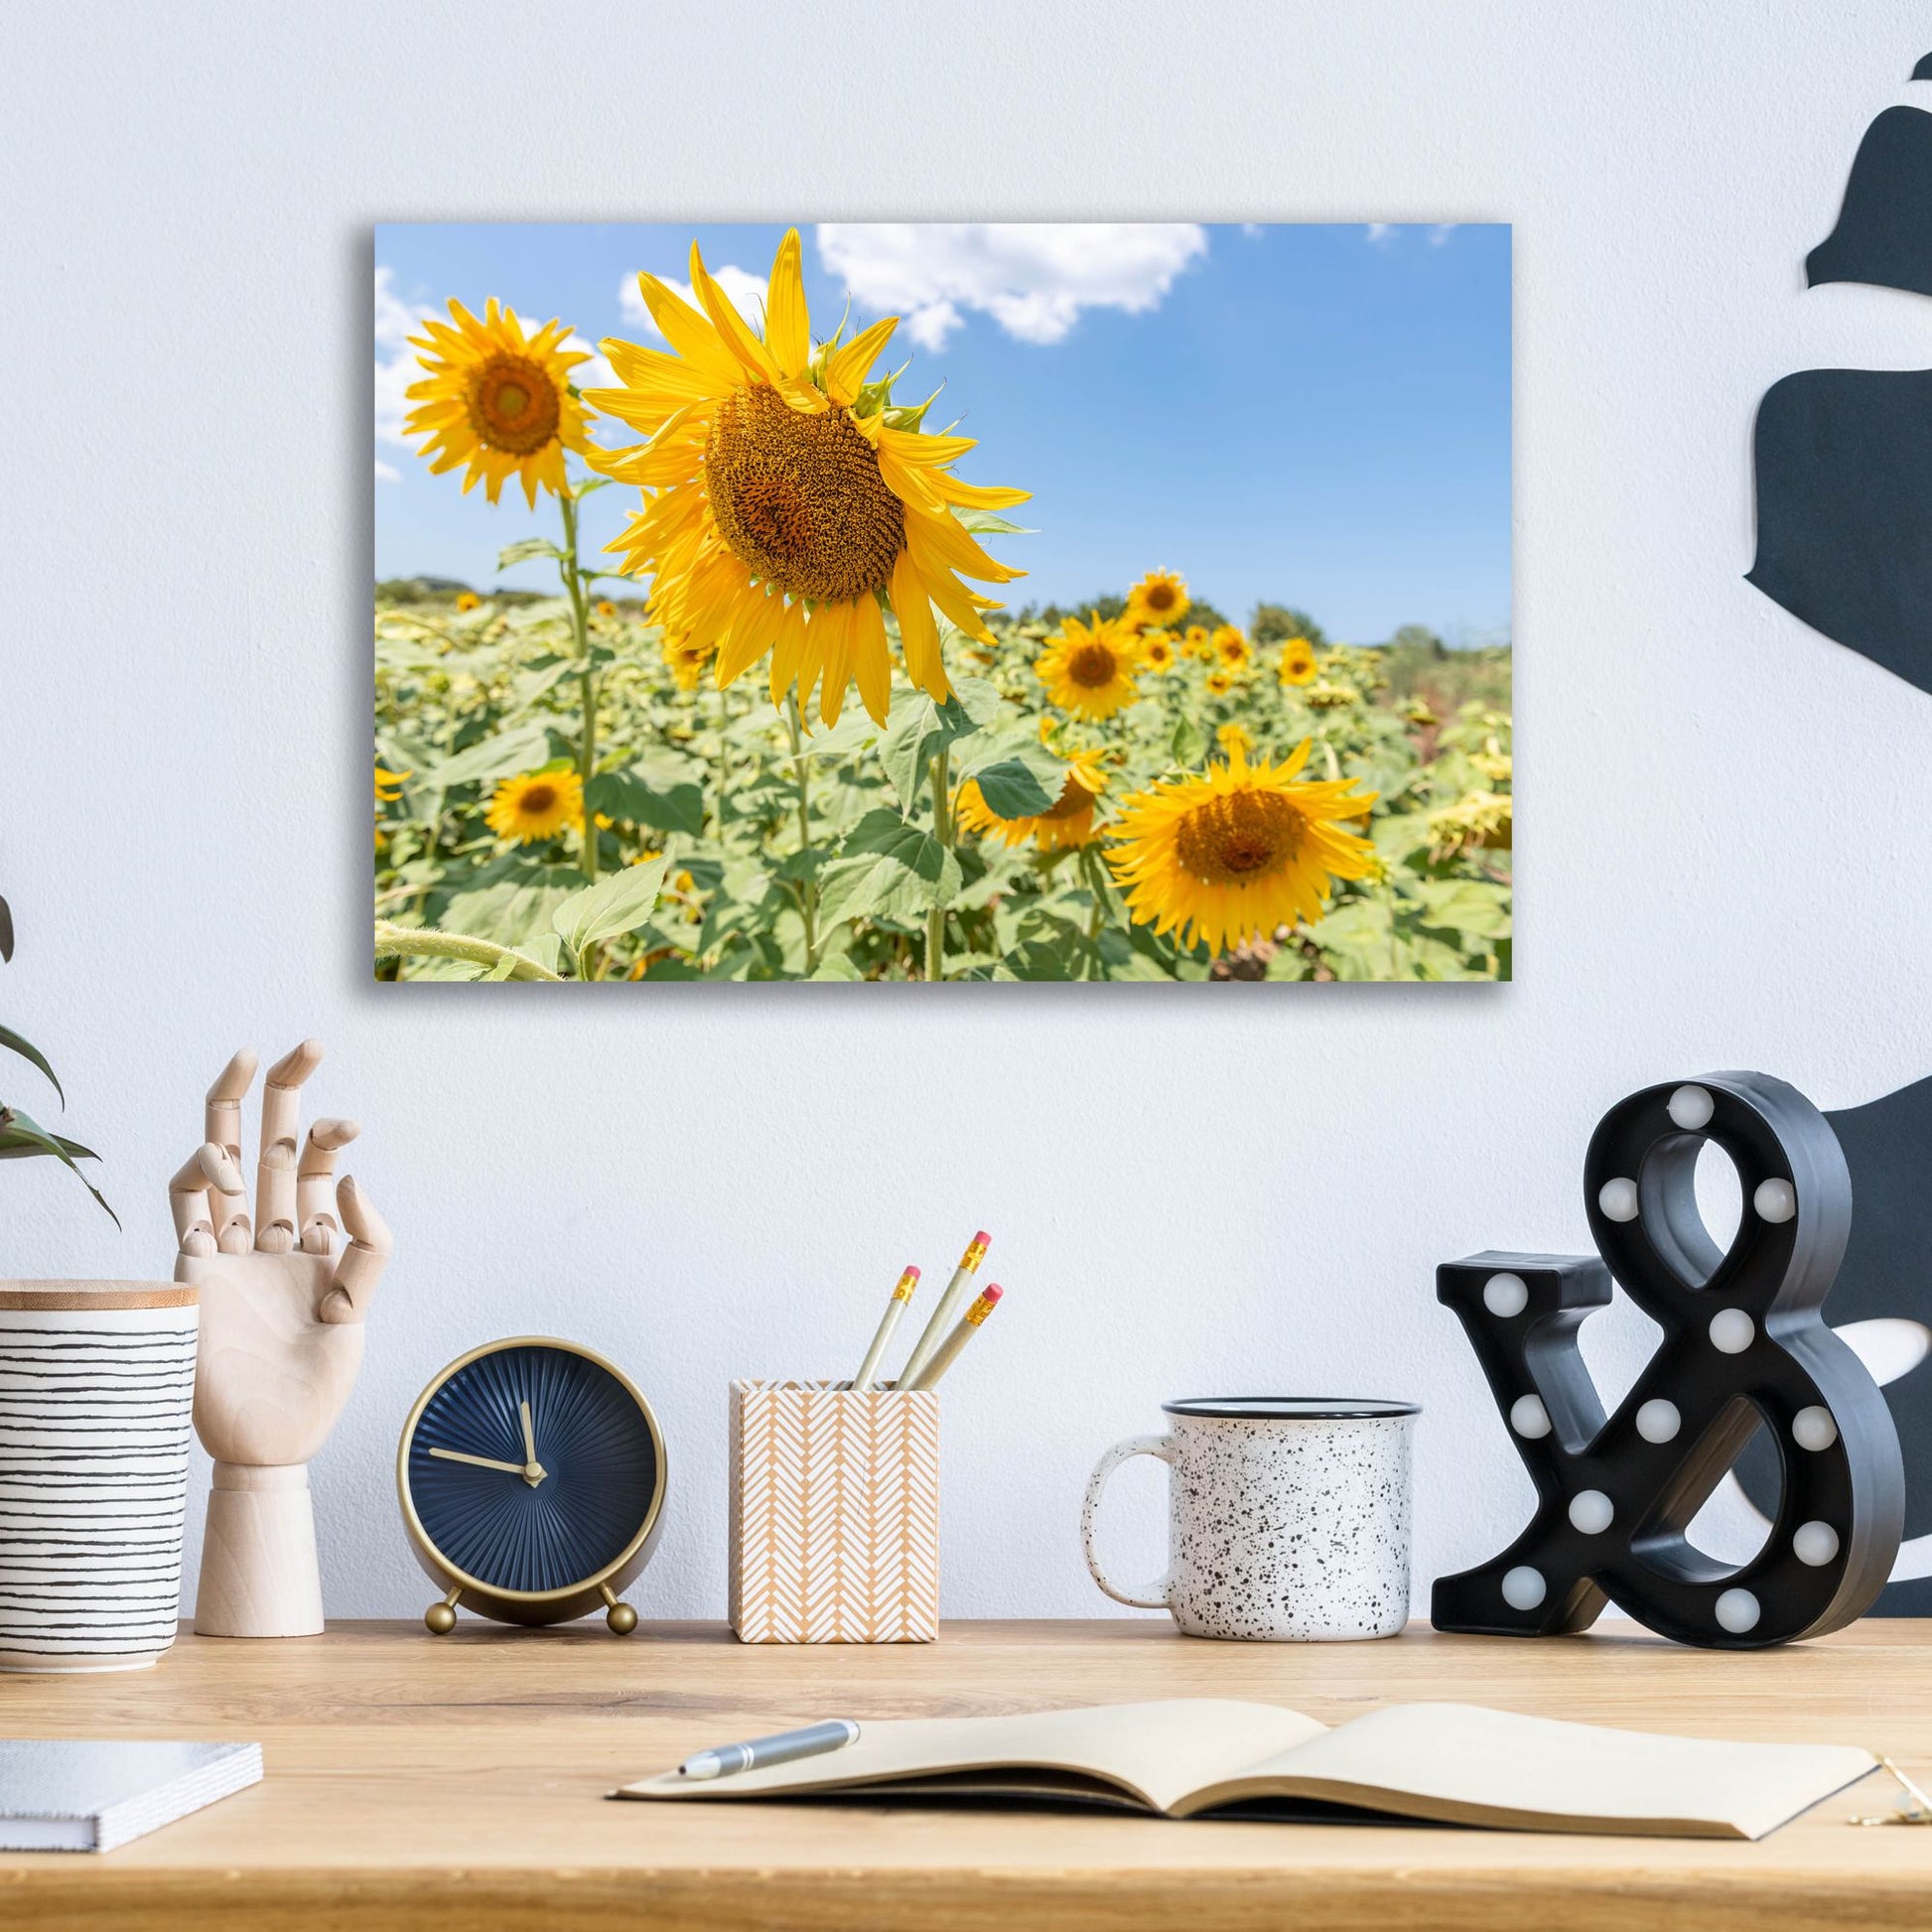 Epic Art ' Sunflowers I' by Richard Silver, Acrylic Glass Wall Art,16x12